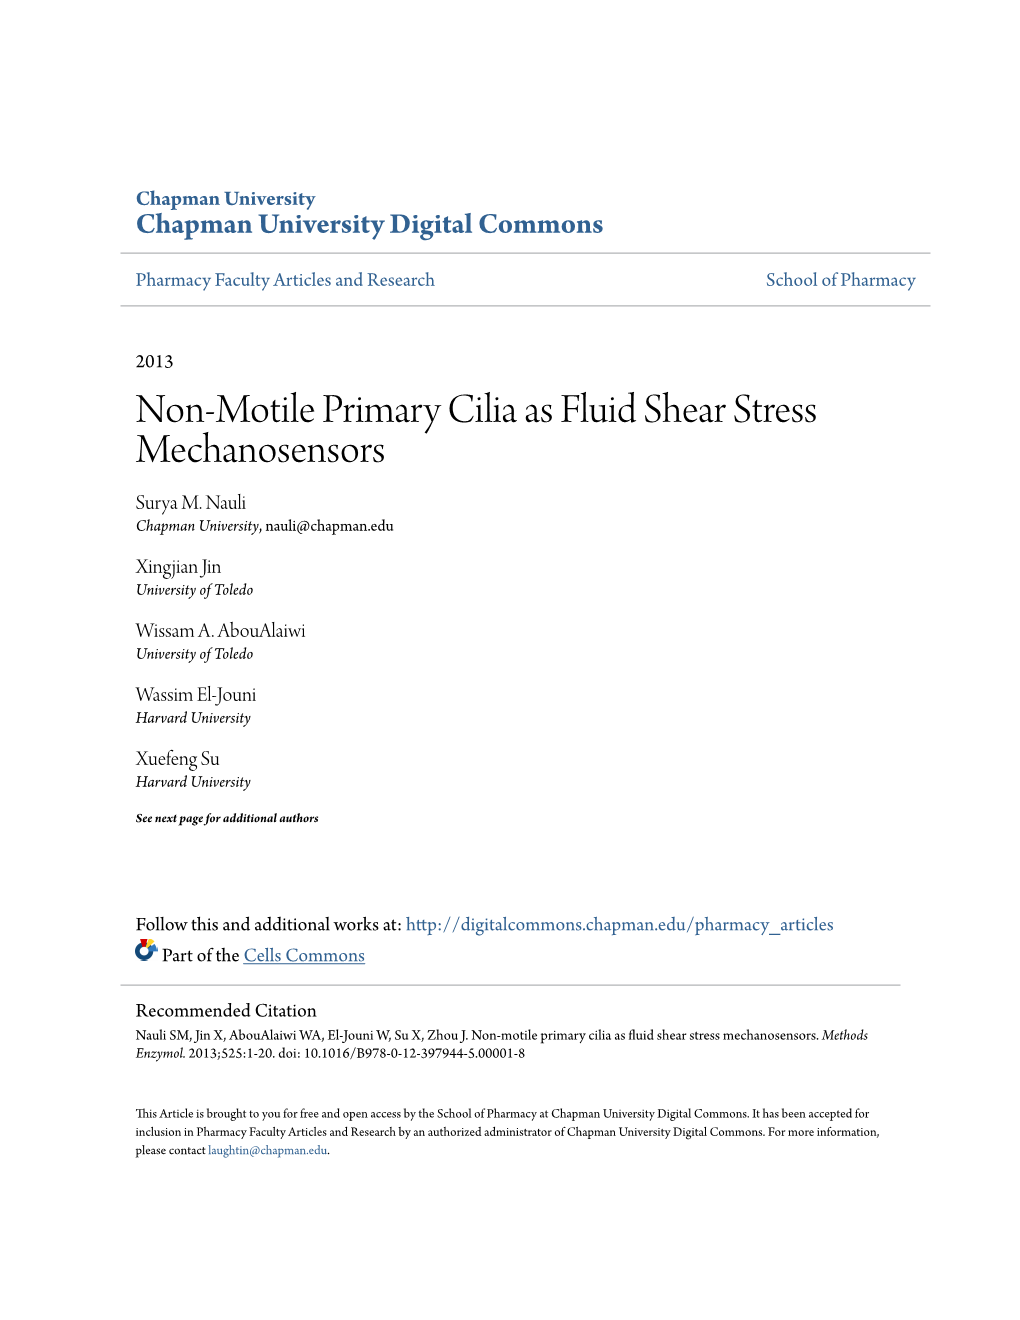 Non-Motile Primary Cilia As Fluid Shear Stress Mechanosensors Surya M